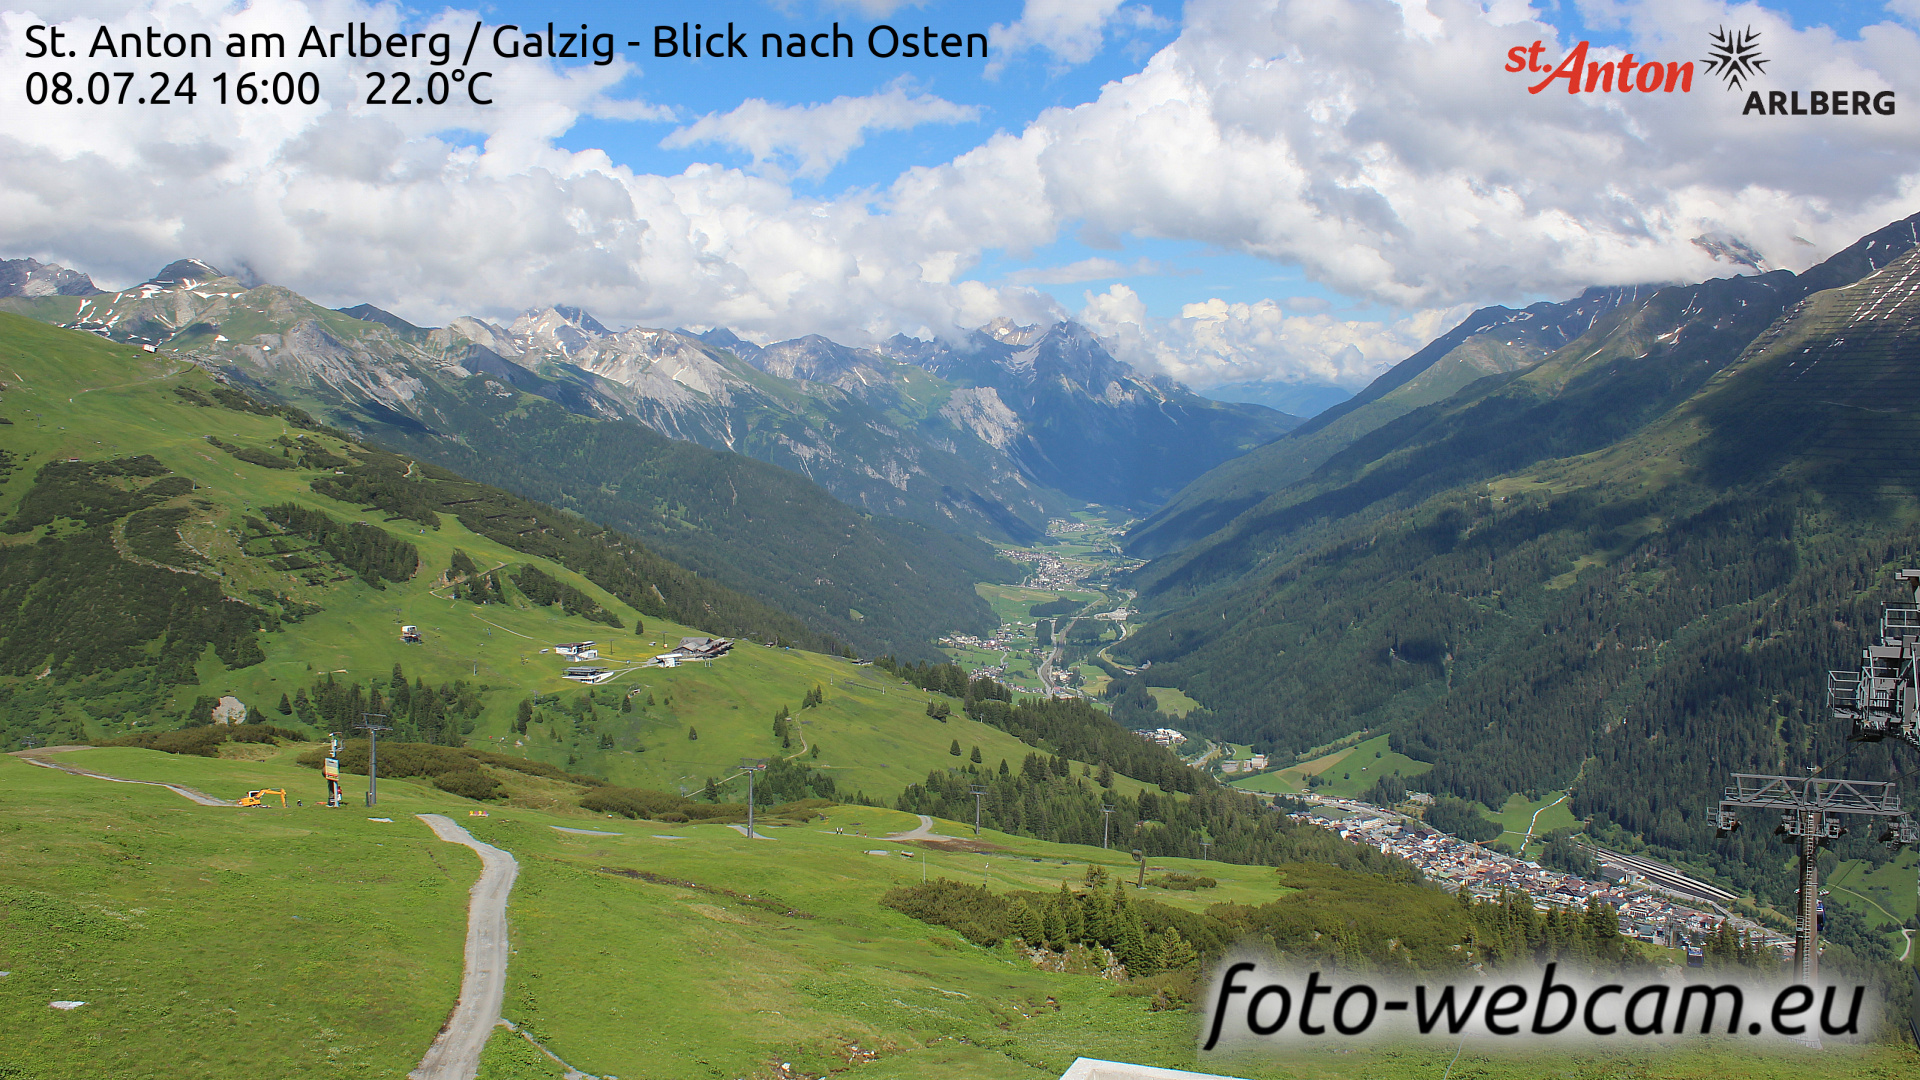 St. Anton am Arlberg Dom. 16:01